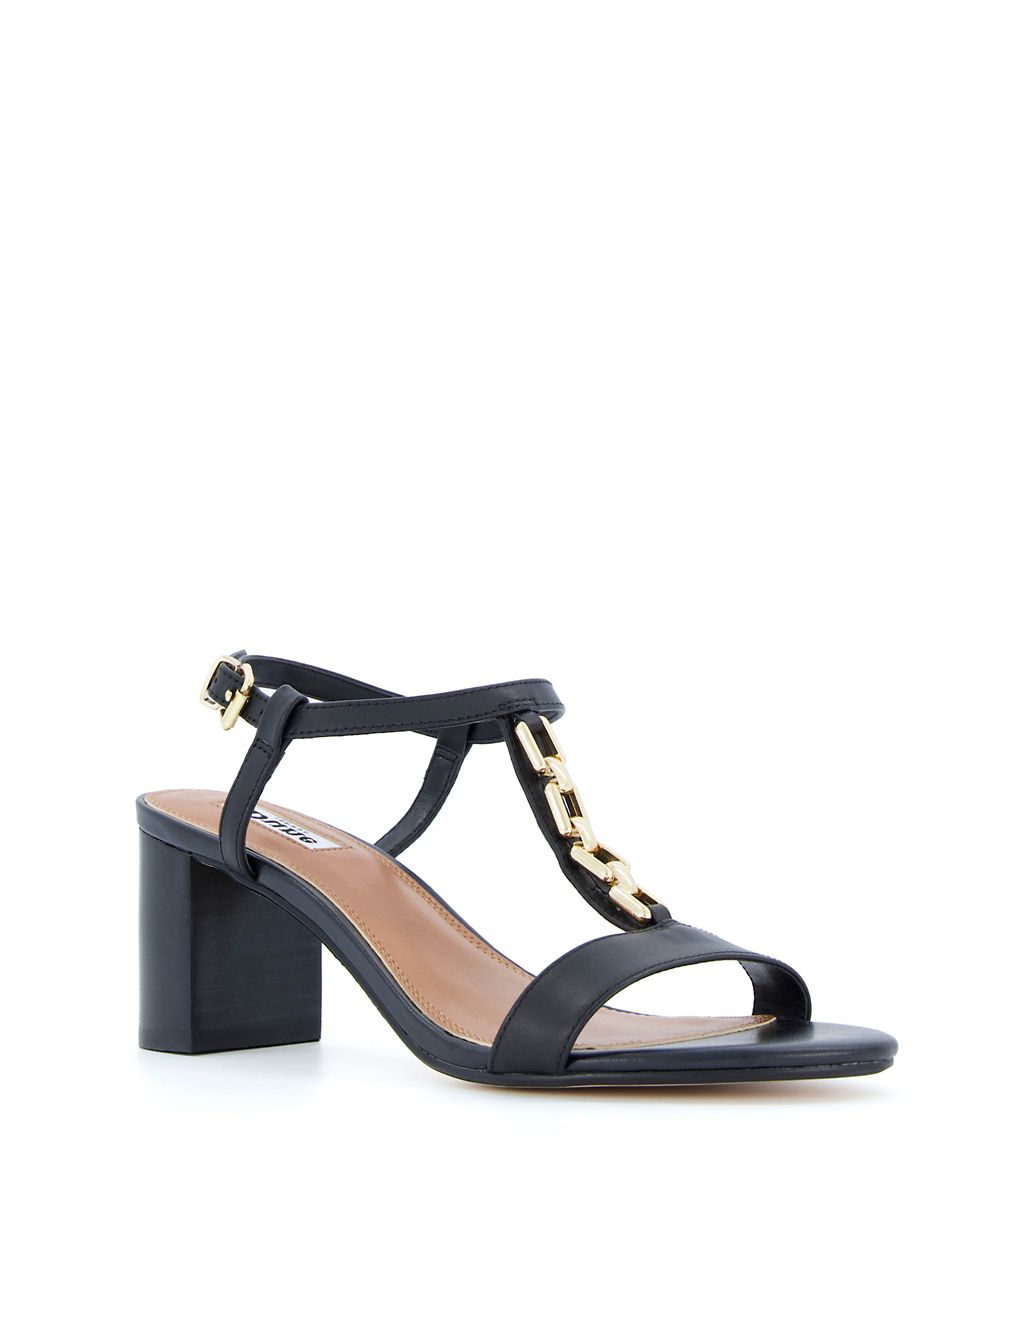 Leather Ankle Strap Block Heel Sandals | Dune London | M&S